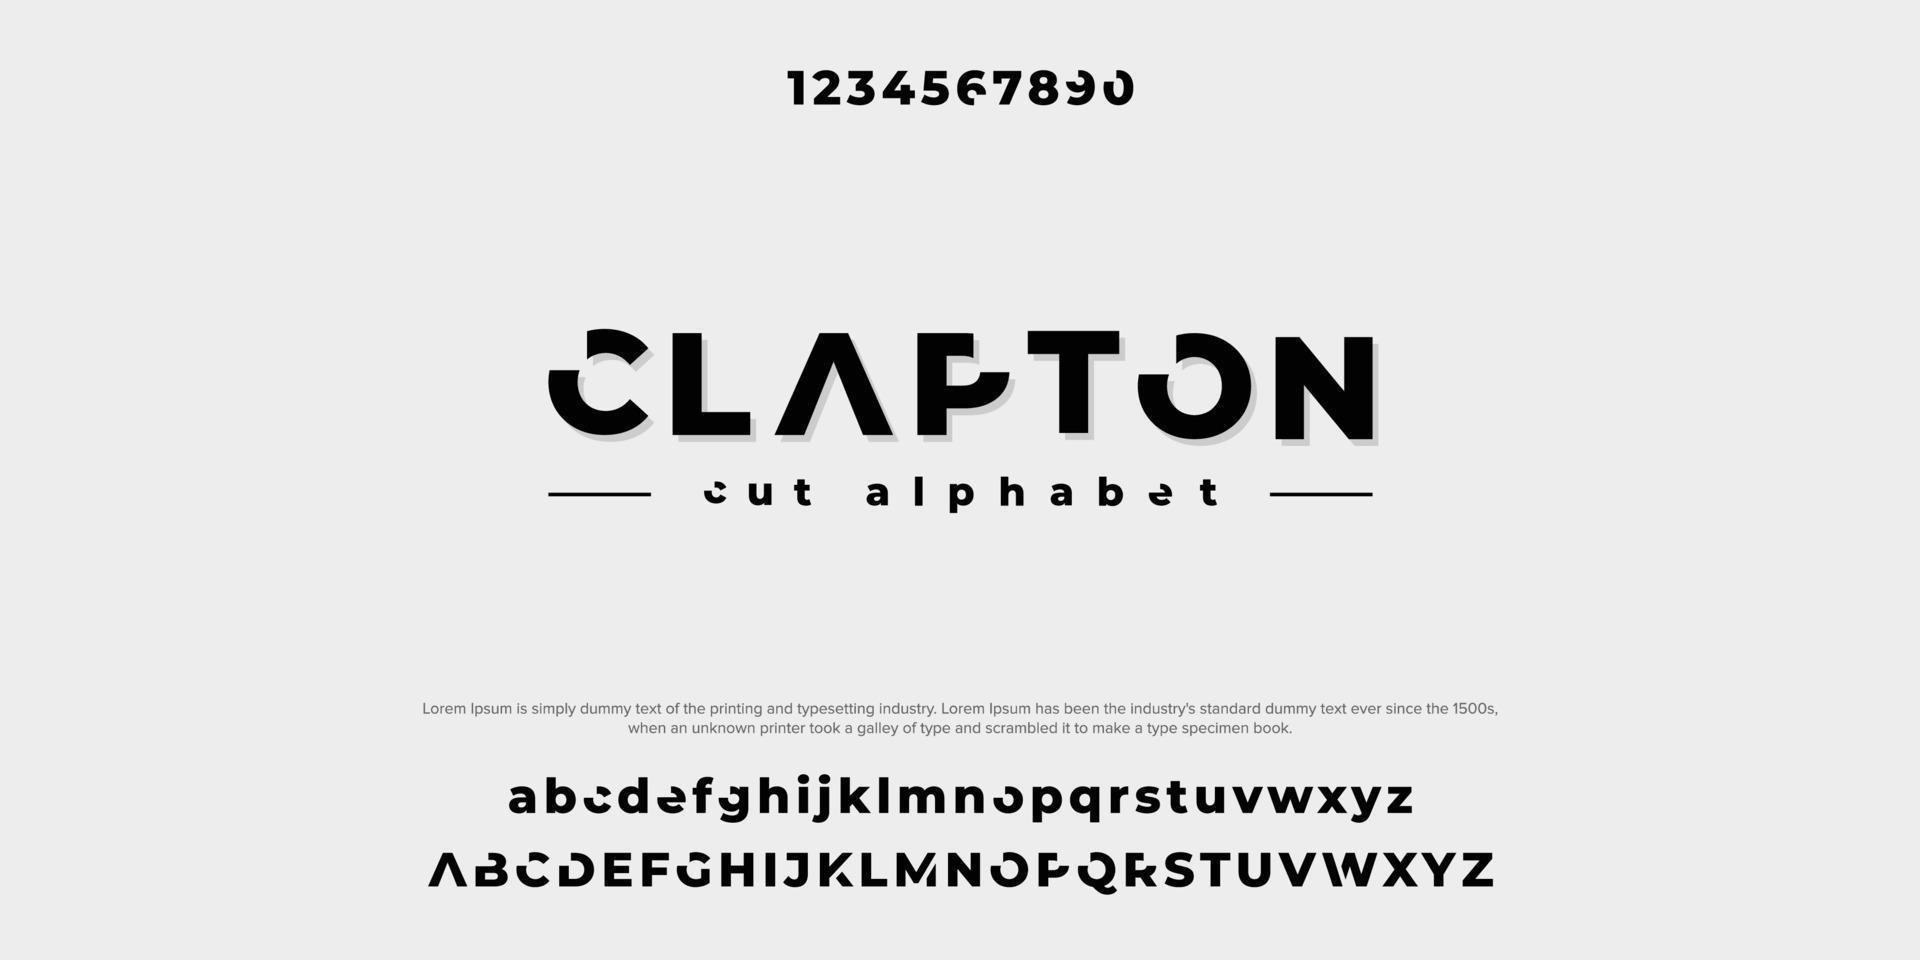 clapton abstrakta minimala moderna alfabetteckensnitt. typografi teknik vektor illustration